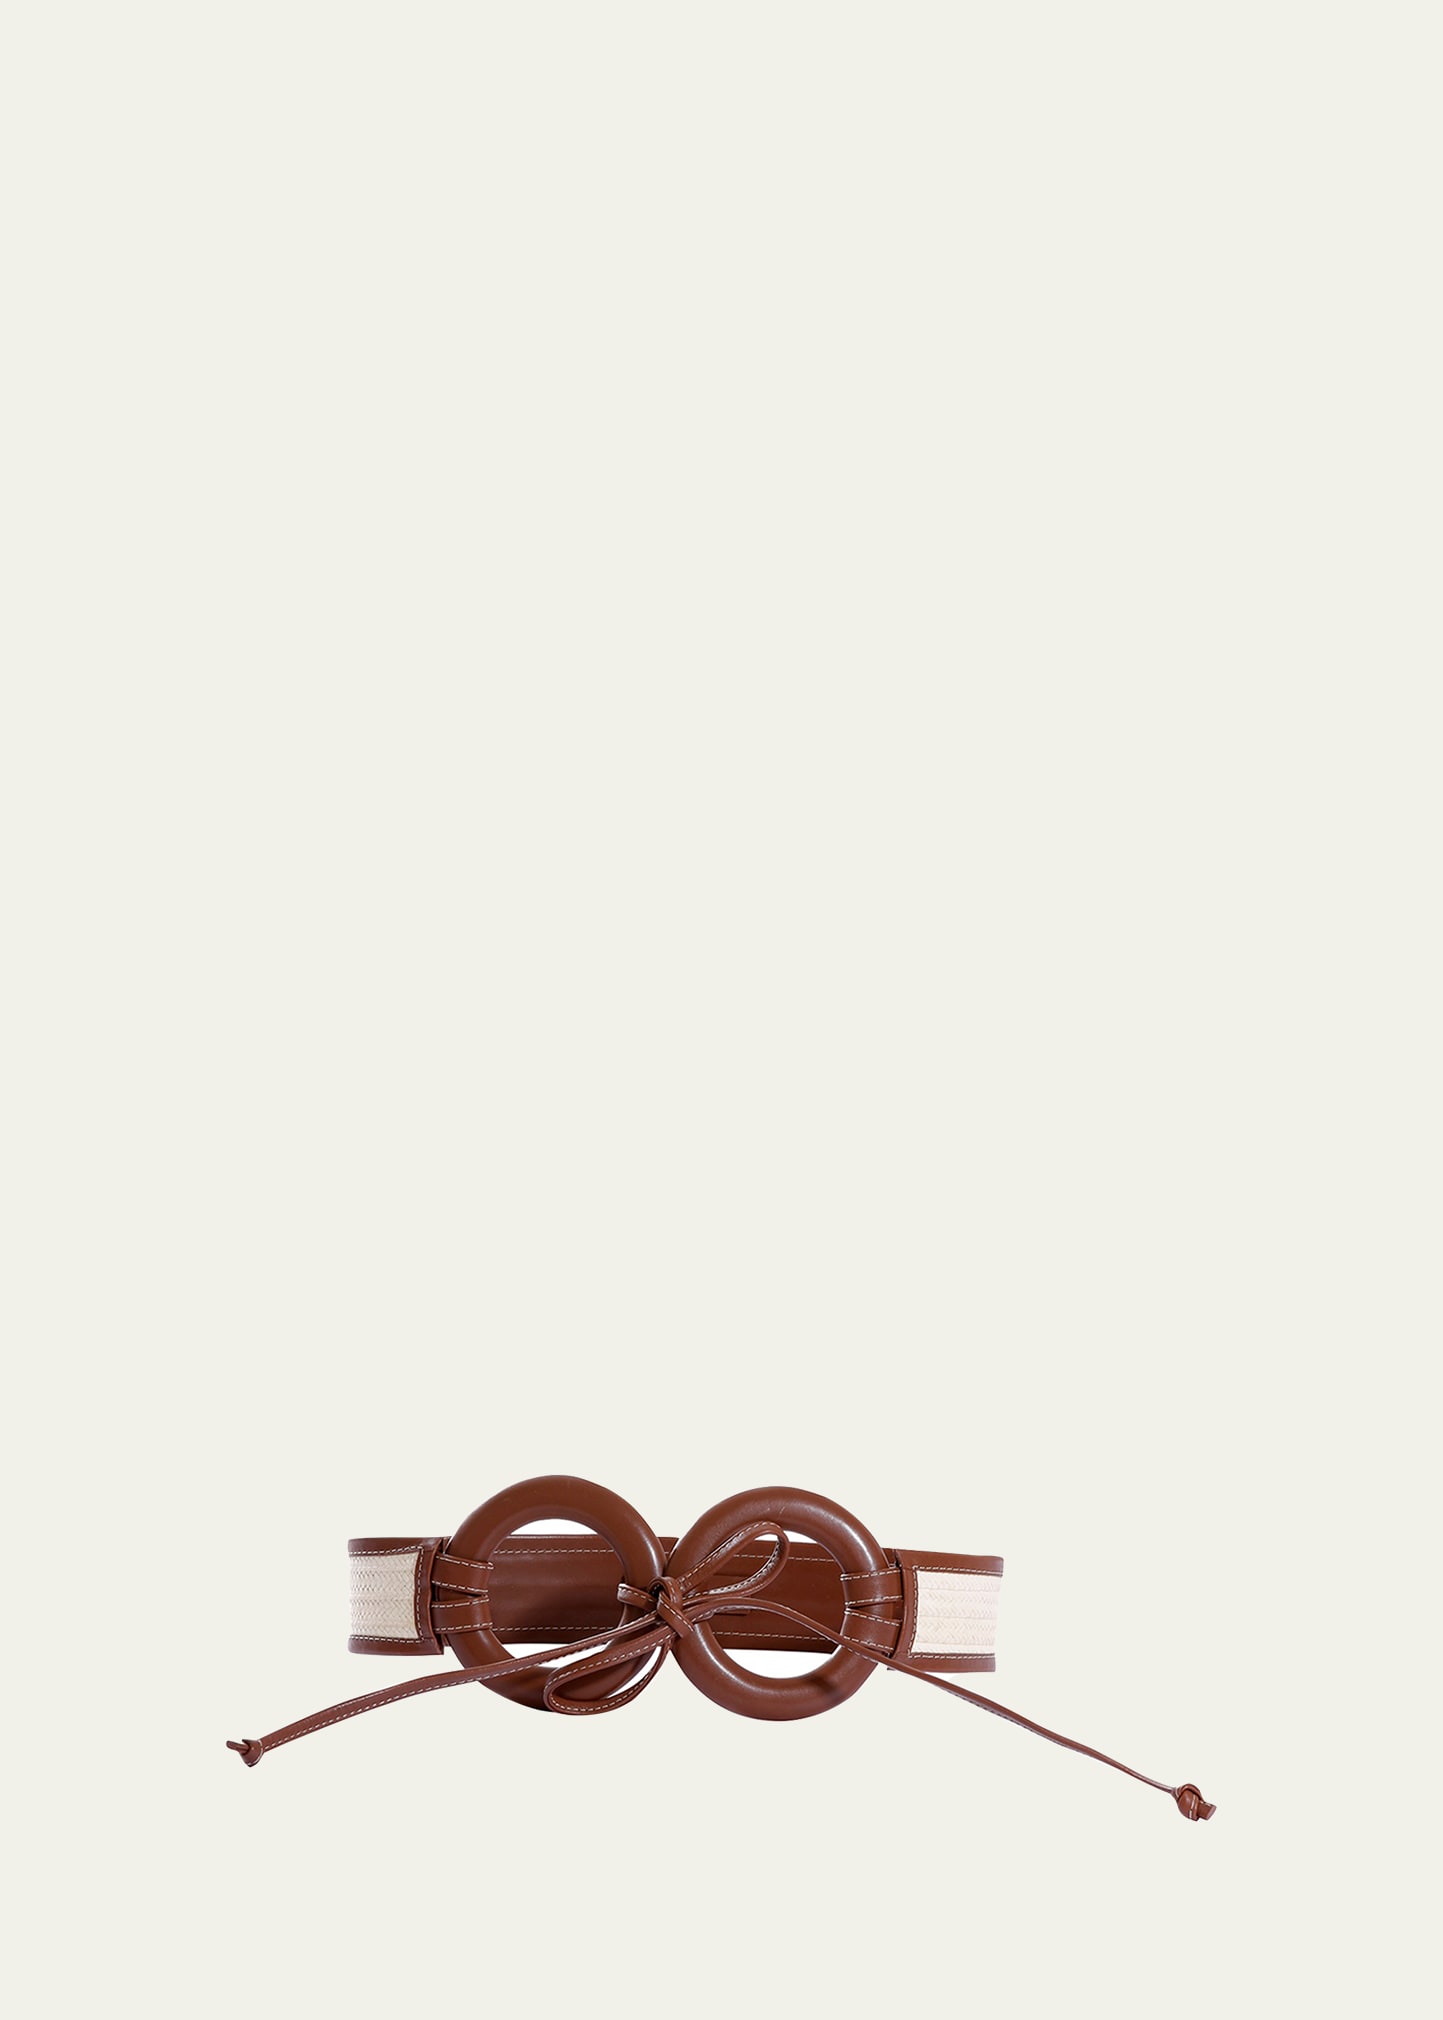 ADRIANA CASTRO Zenu Ring Leather and Cana Flecha Self-Tie Belt